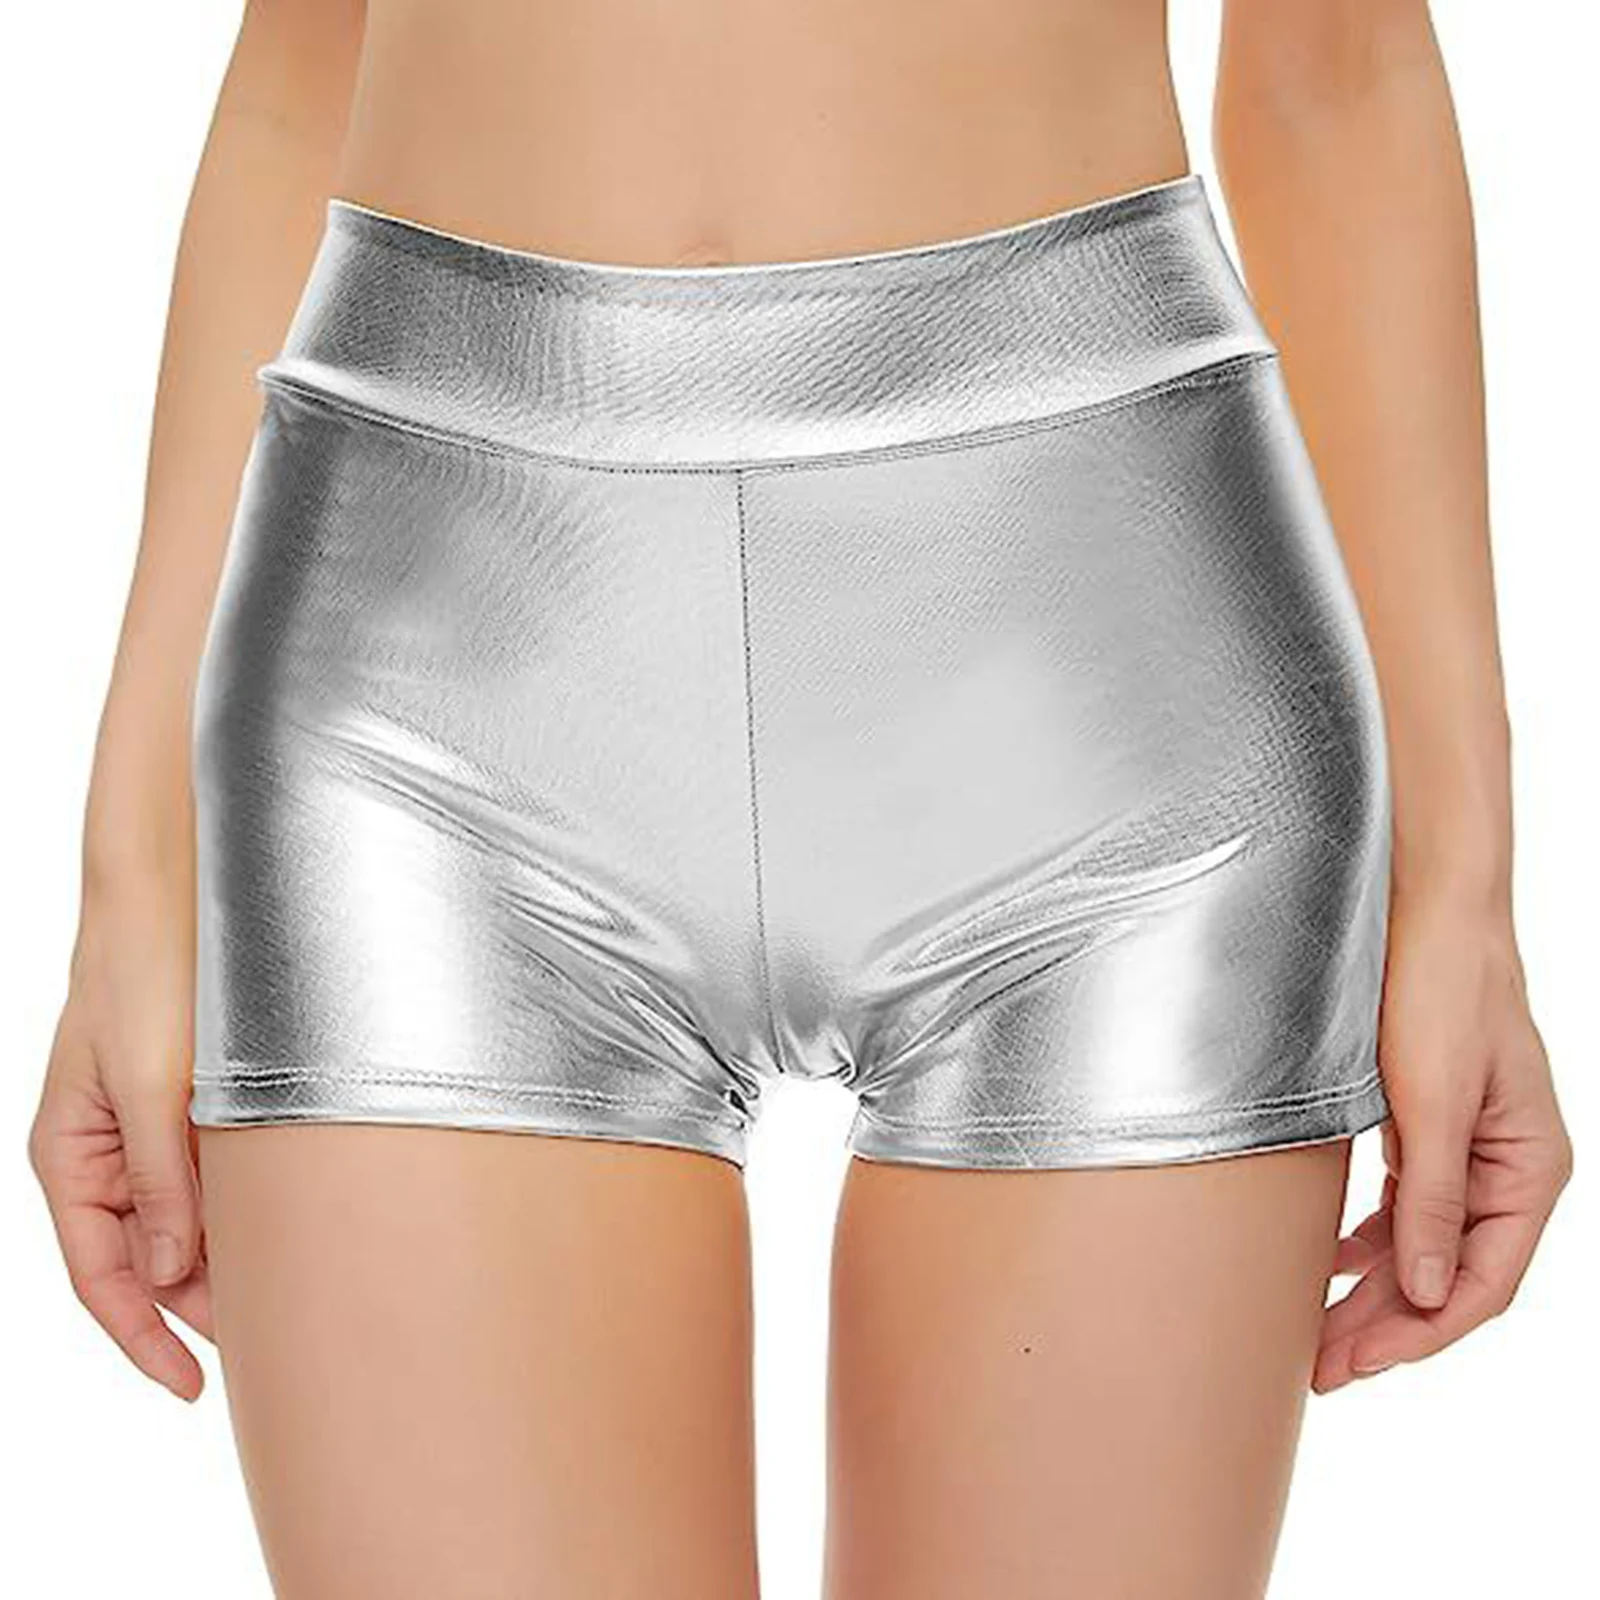 

Womens Metallic Hot Pants Clubwear Shiny High Waist Shorts Rave Party Booty Shorts Pole Dancing Music Festival Bottoms